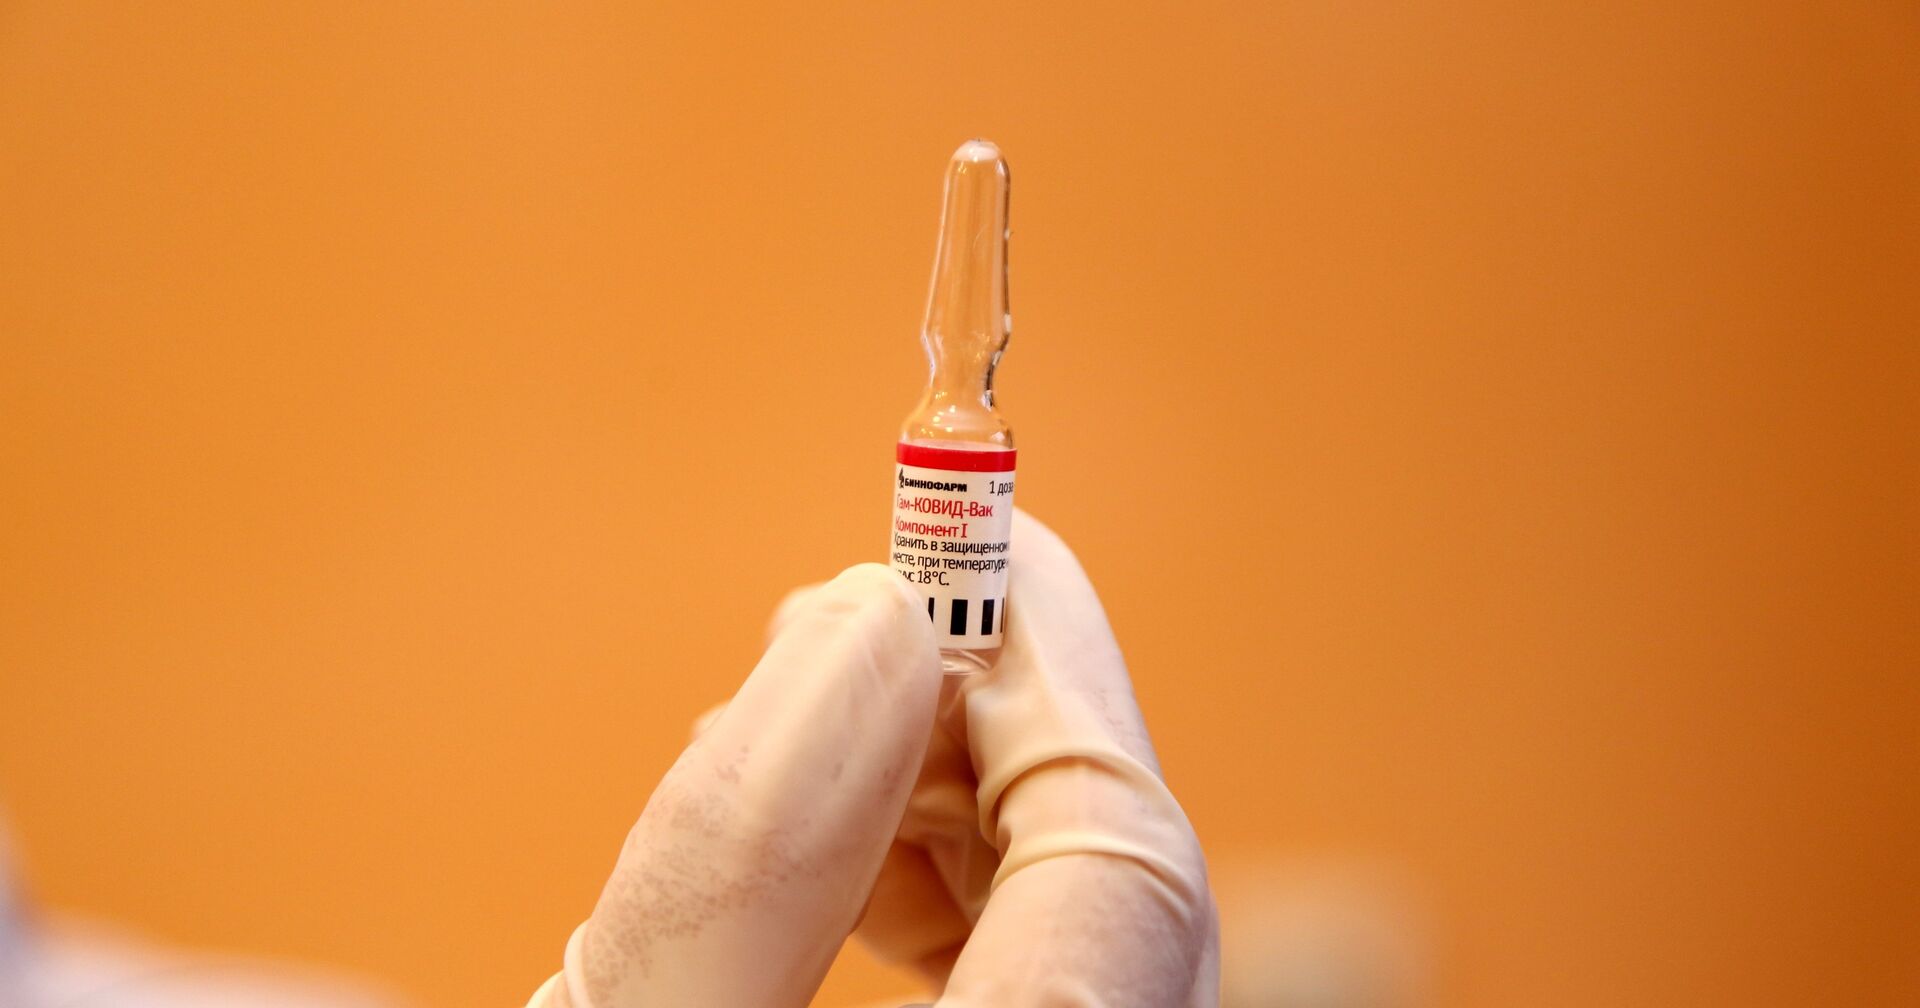 Медицинский работник держит в руке вакцину от COVID-19 Спутник-V (Гам-КОВИД-Вак) - ИноСМИ, 1920, 18.02.2021